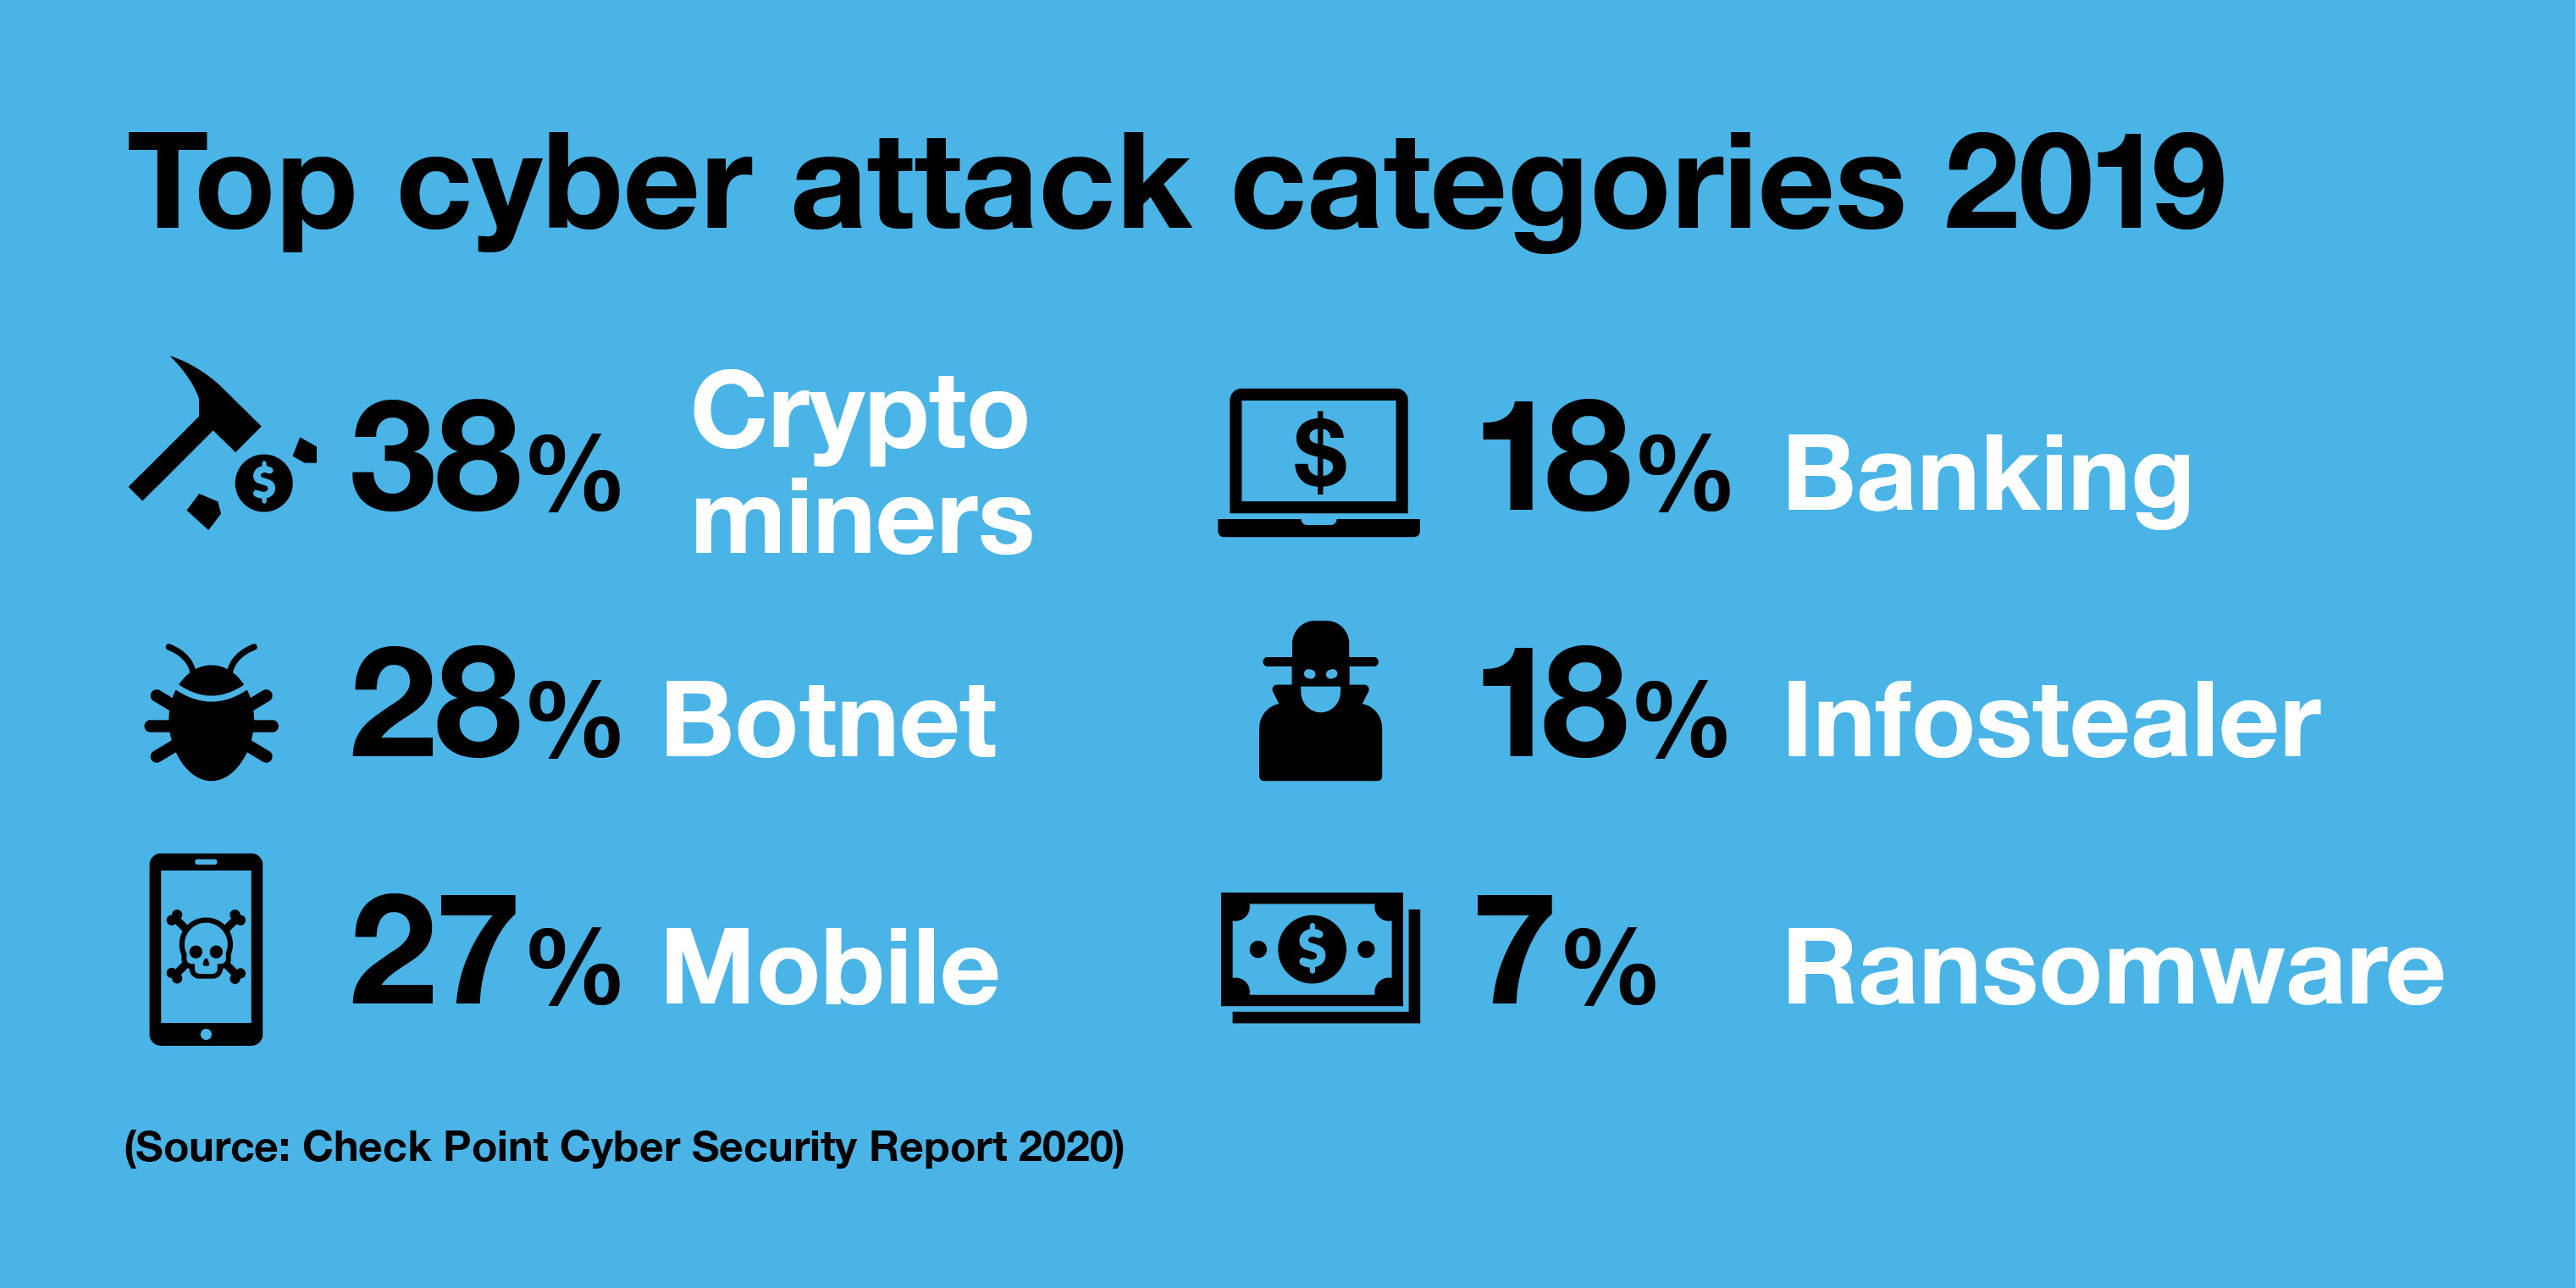 Top cyberattack categories 2019